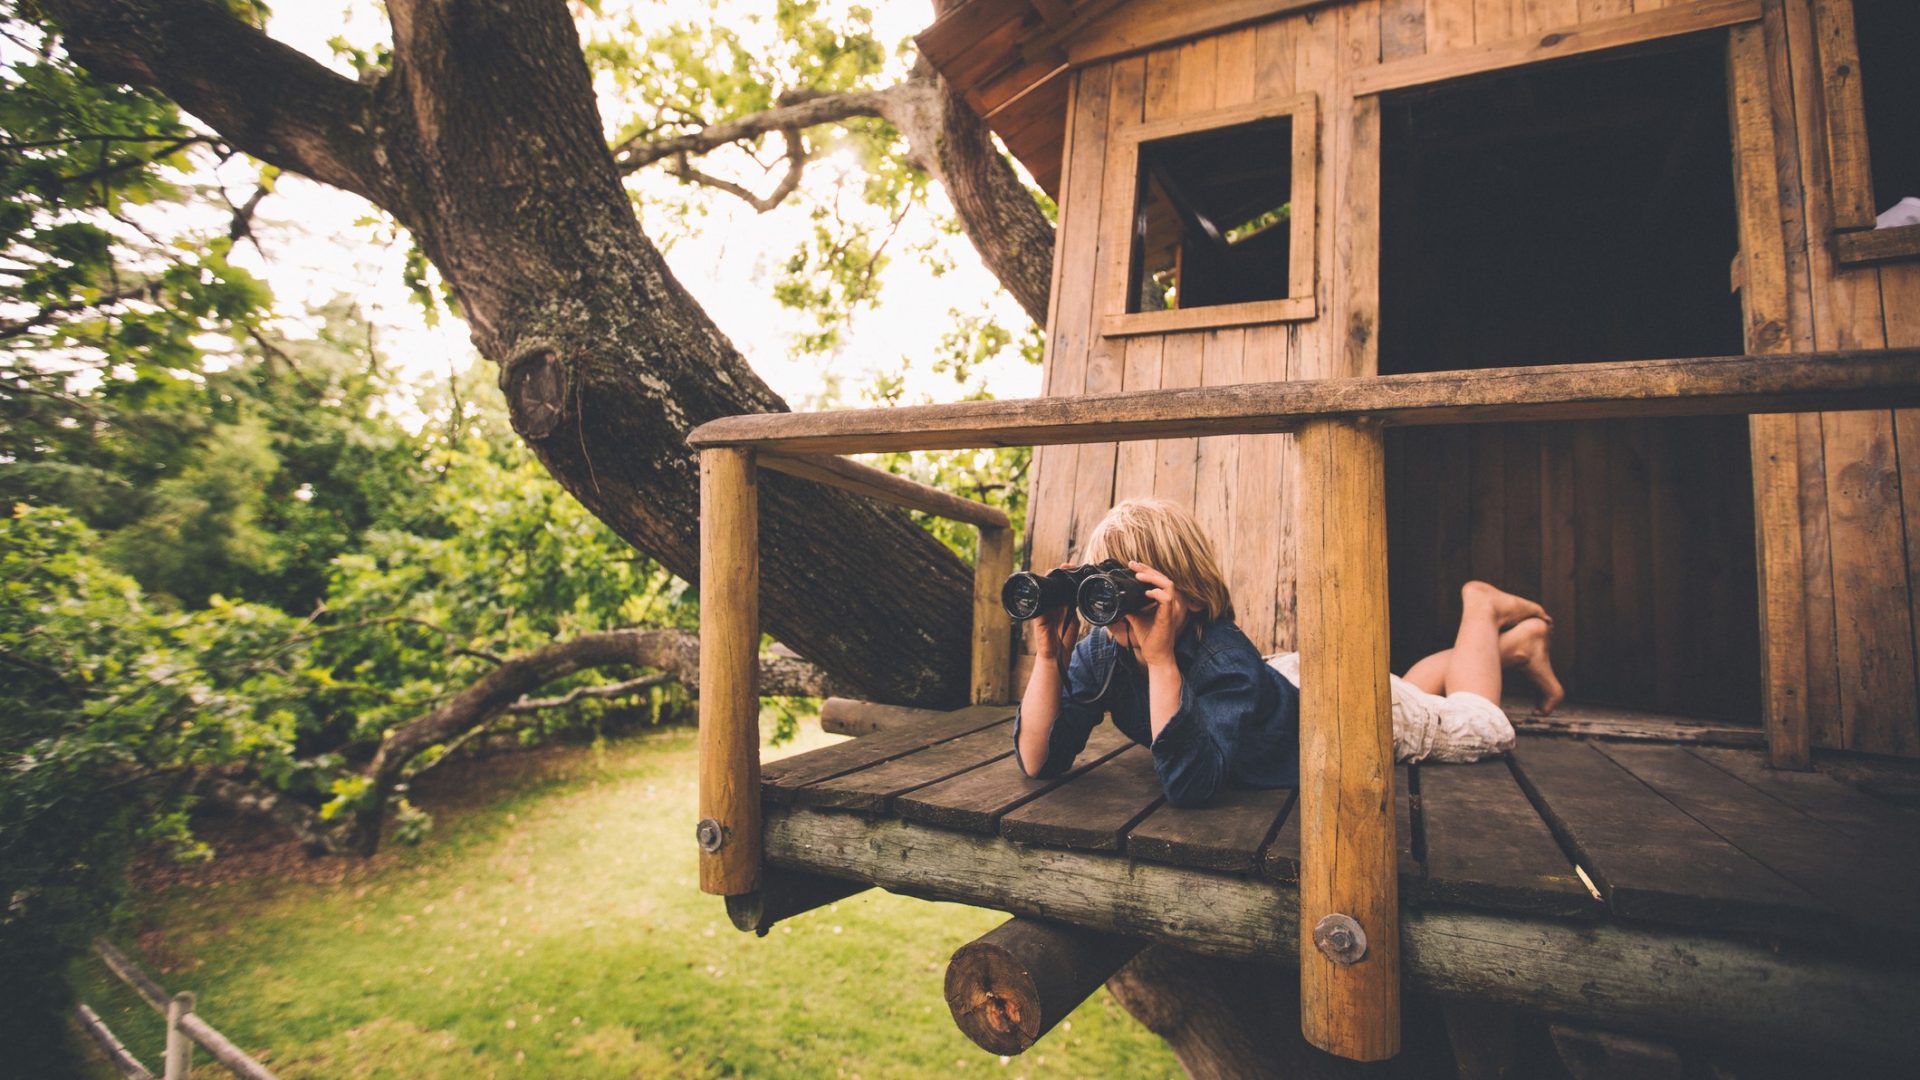 How To Set Up a Treehouse on a Budget